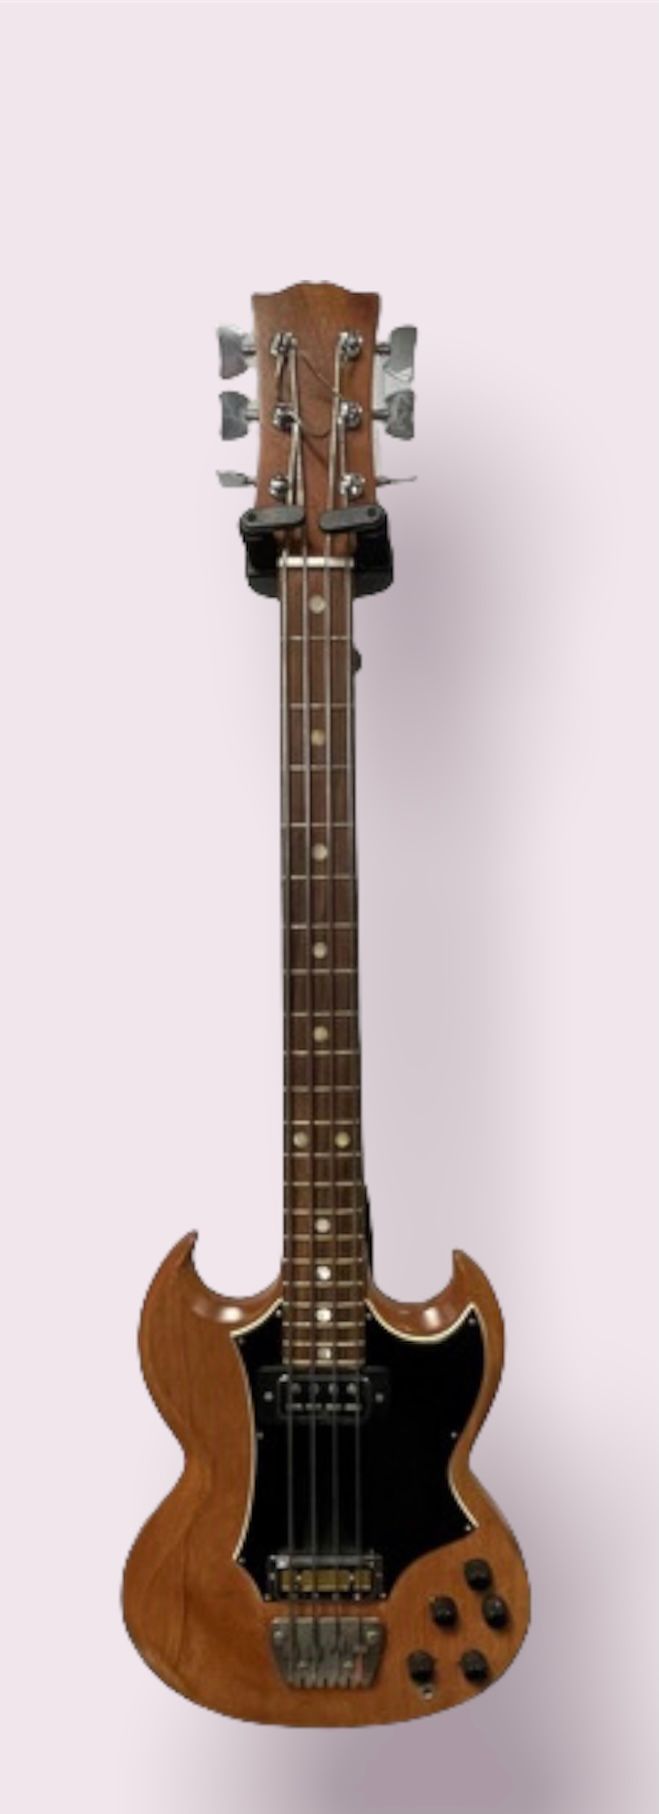 Null 电子低音吉他，SG型

经清漆处理的木材

(背面可见孔)

带灰色箱子（锁和铰链生锈了）